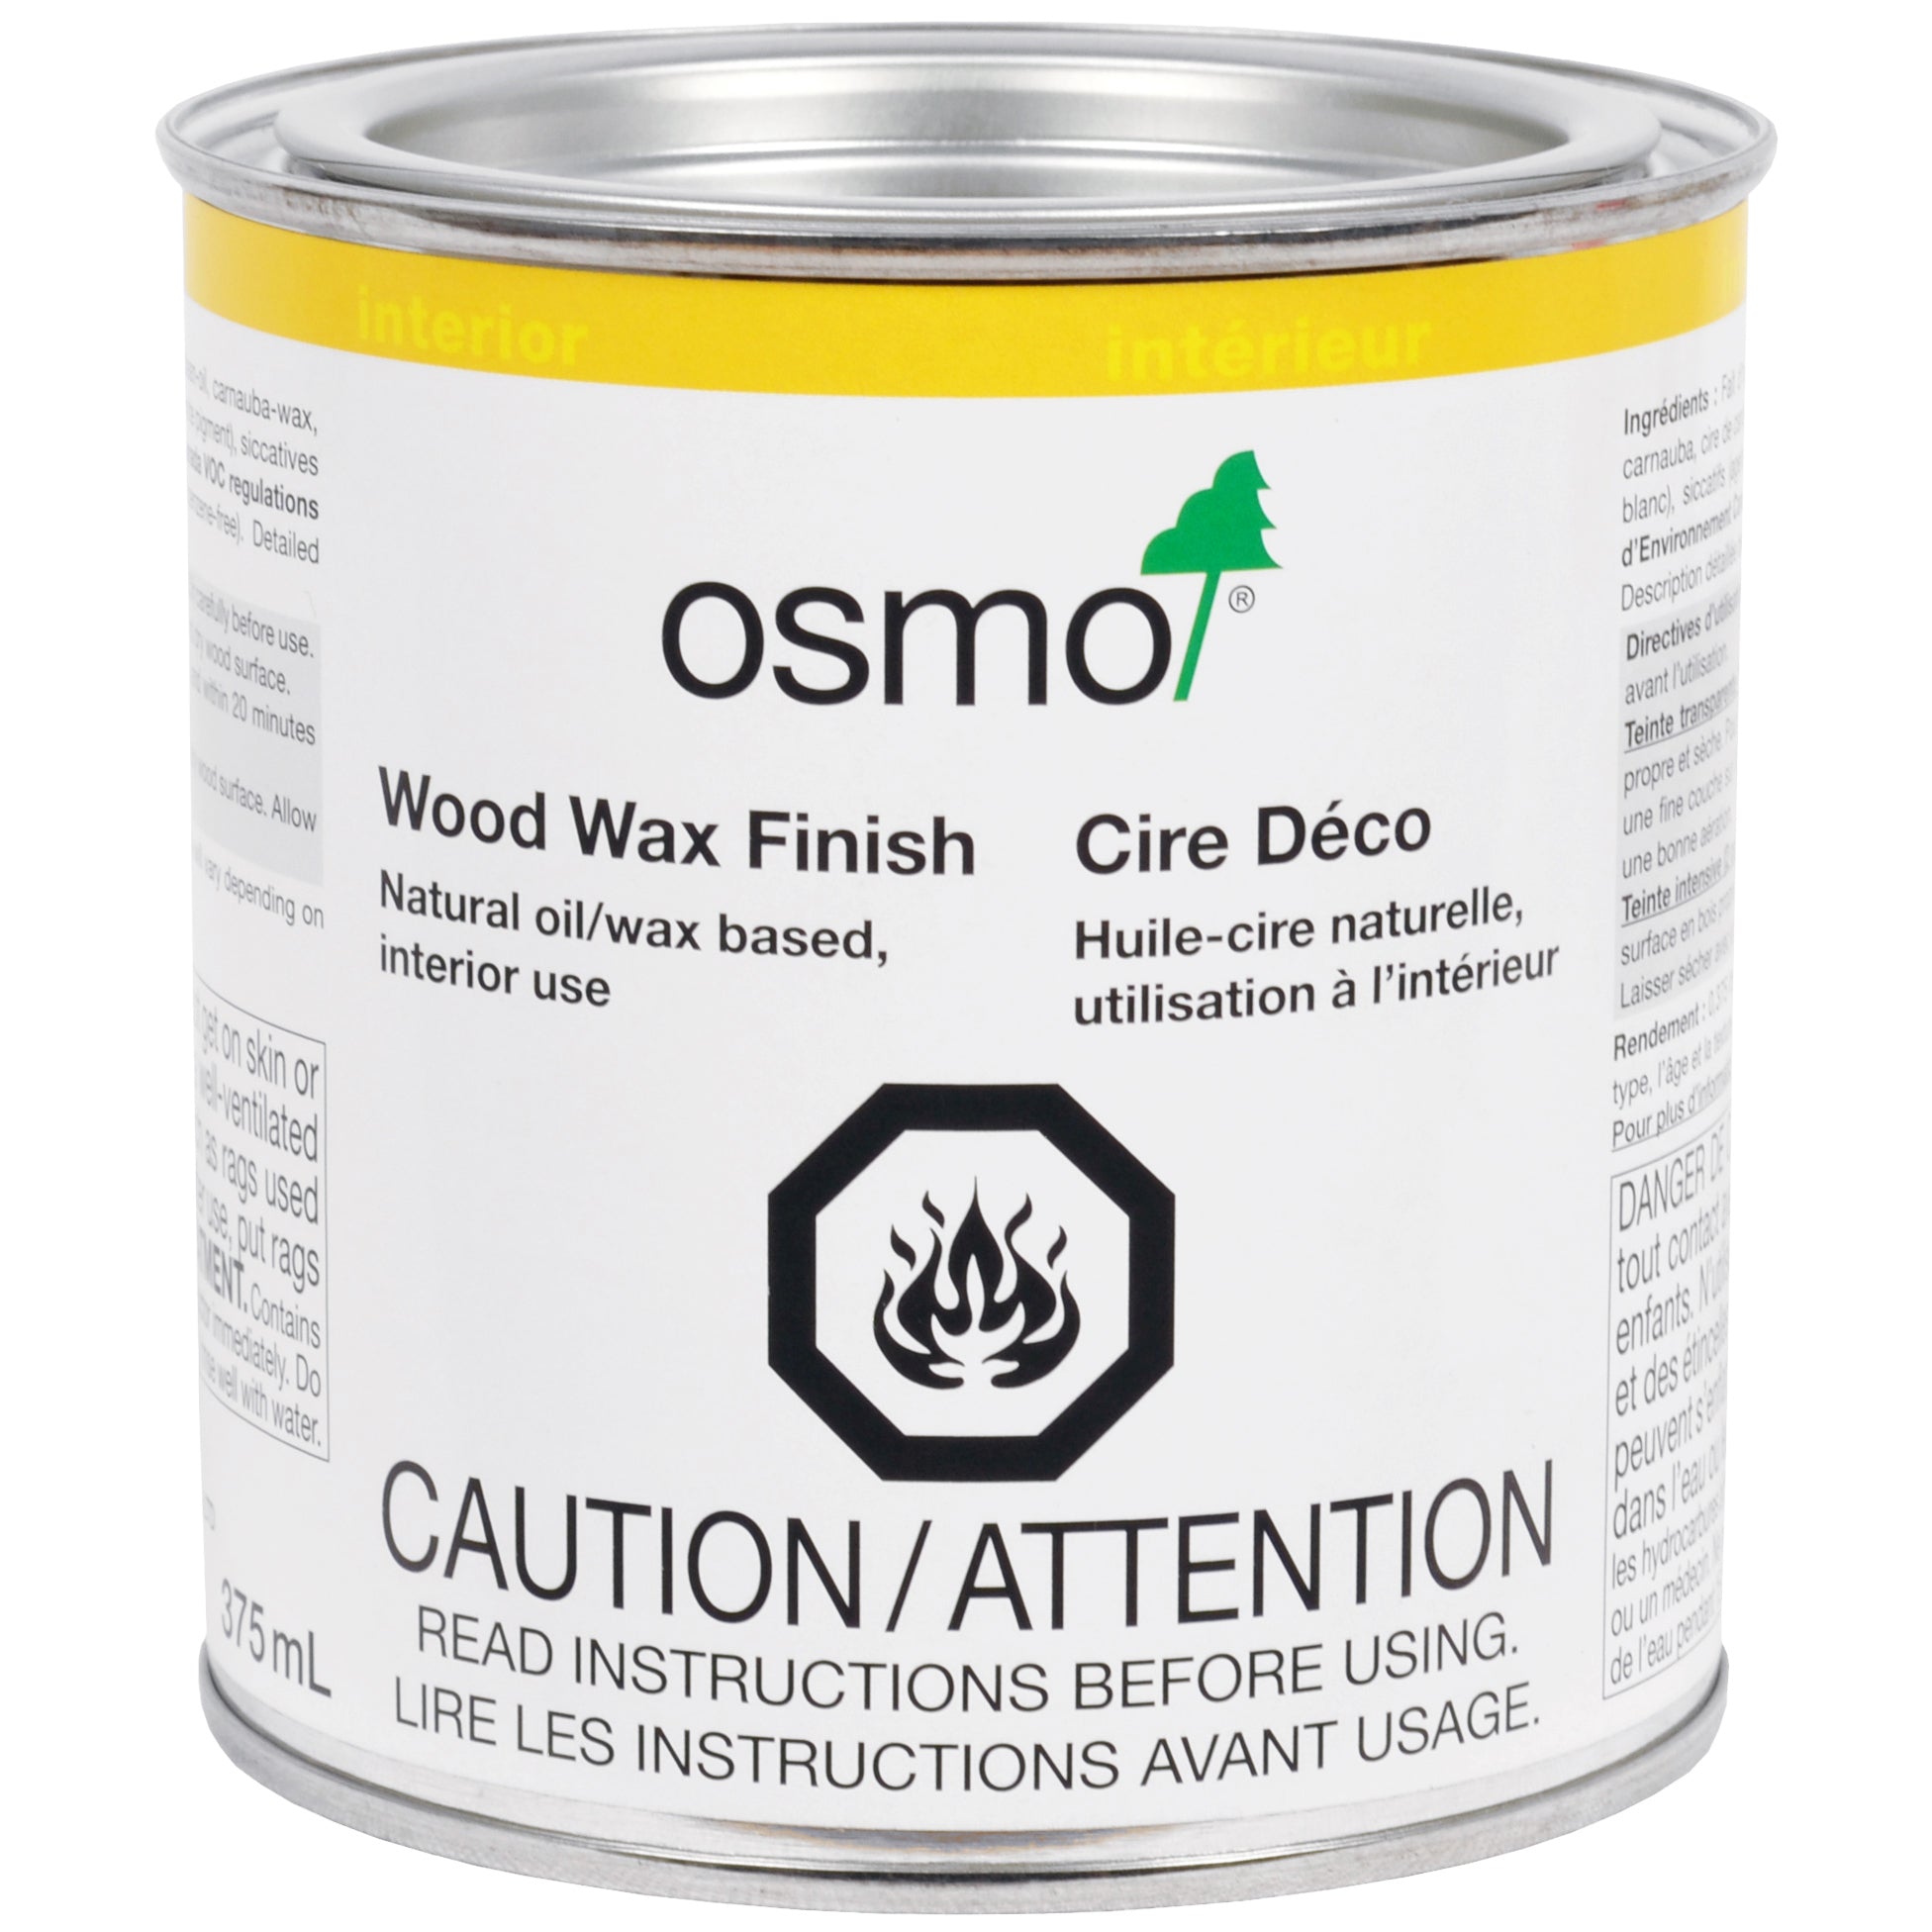 Osmo Wood Wax Finish in Light Oak - Internal Osmo Oils